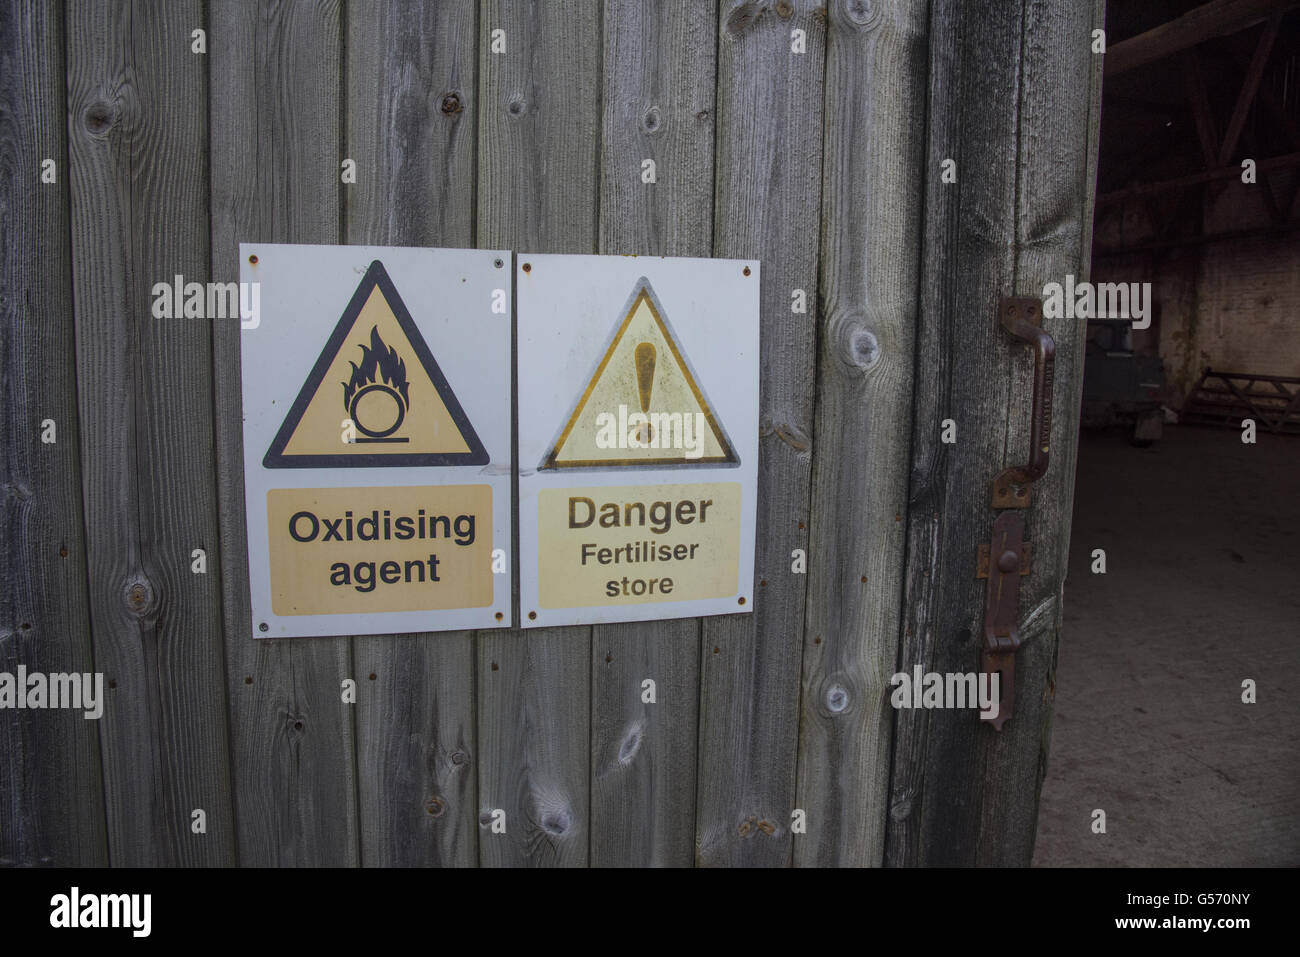 'Oxidising agent' and 'Danger Fertiliser store' warning signs on farm barn door, North Yorkshire, England, January Stock Photo